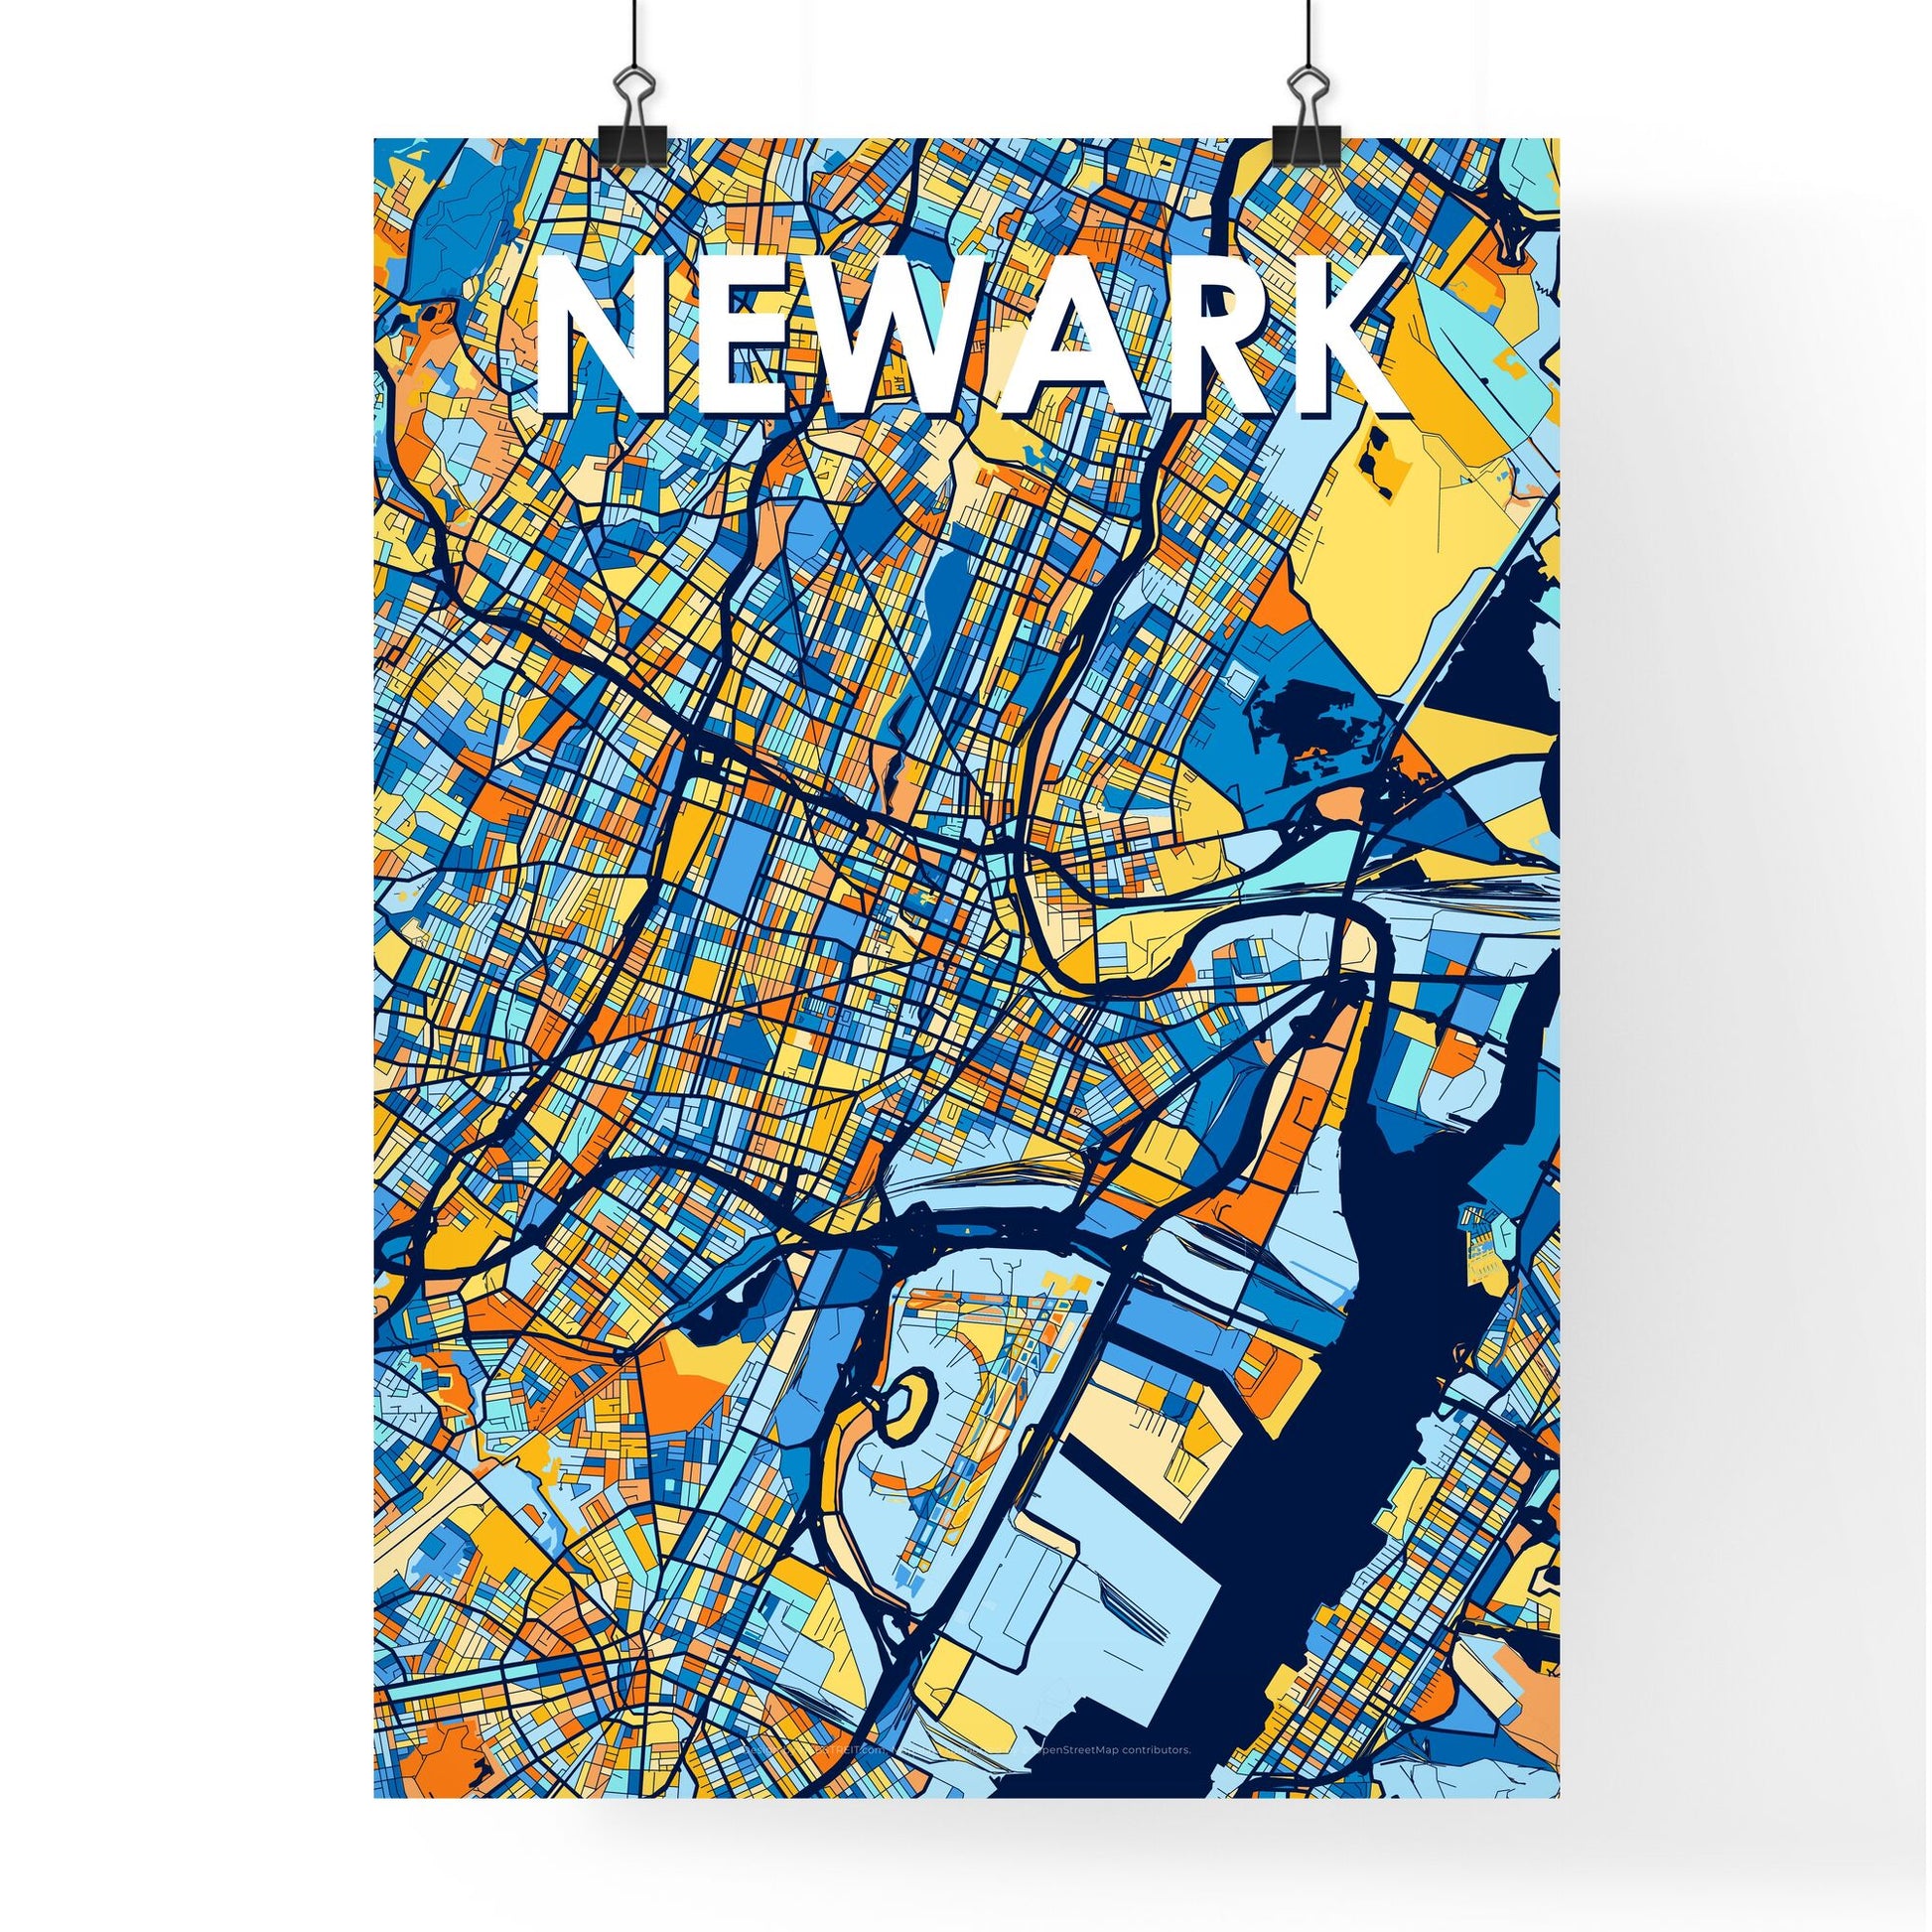 NEWARK NEW JERSEY Vibrant Colorful Art Map Poster Blue Orange